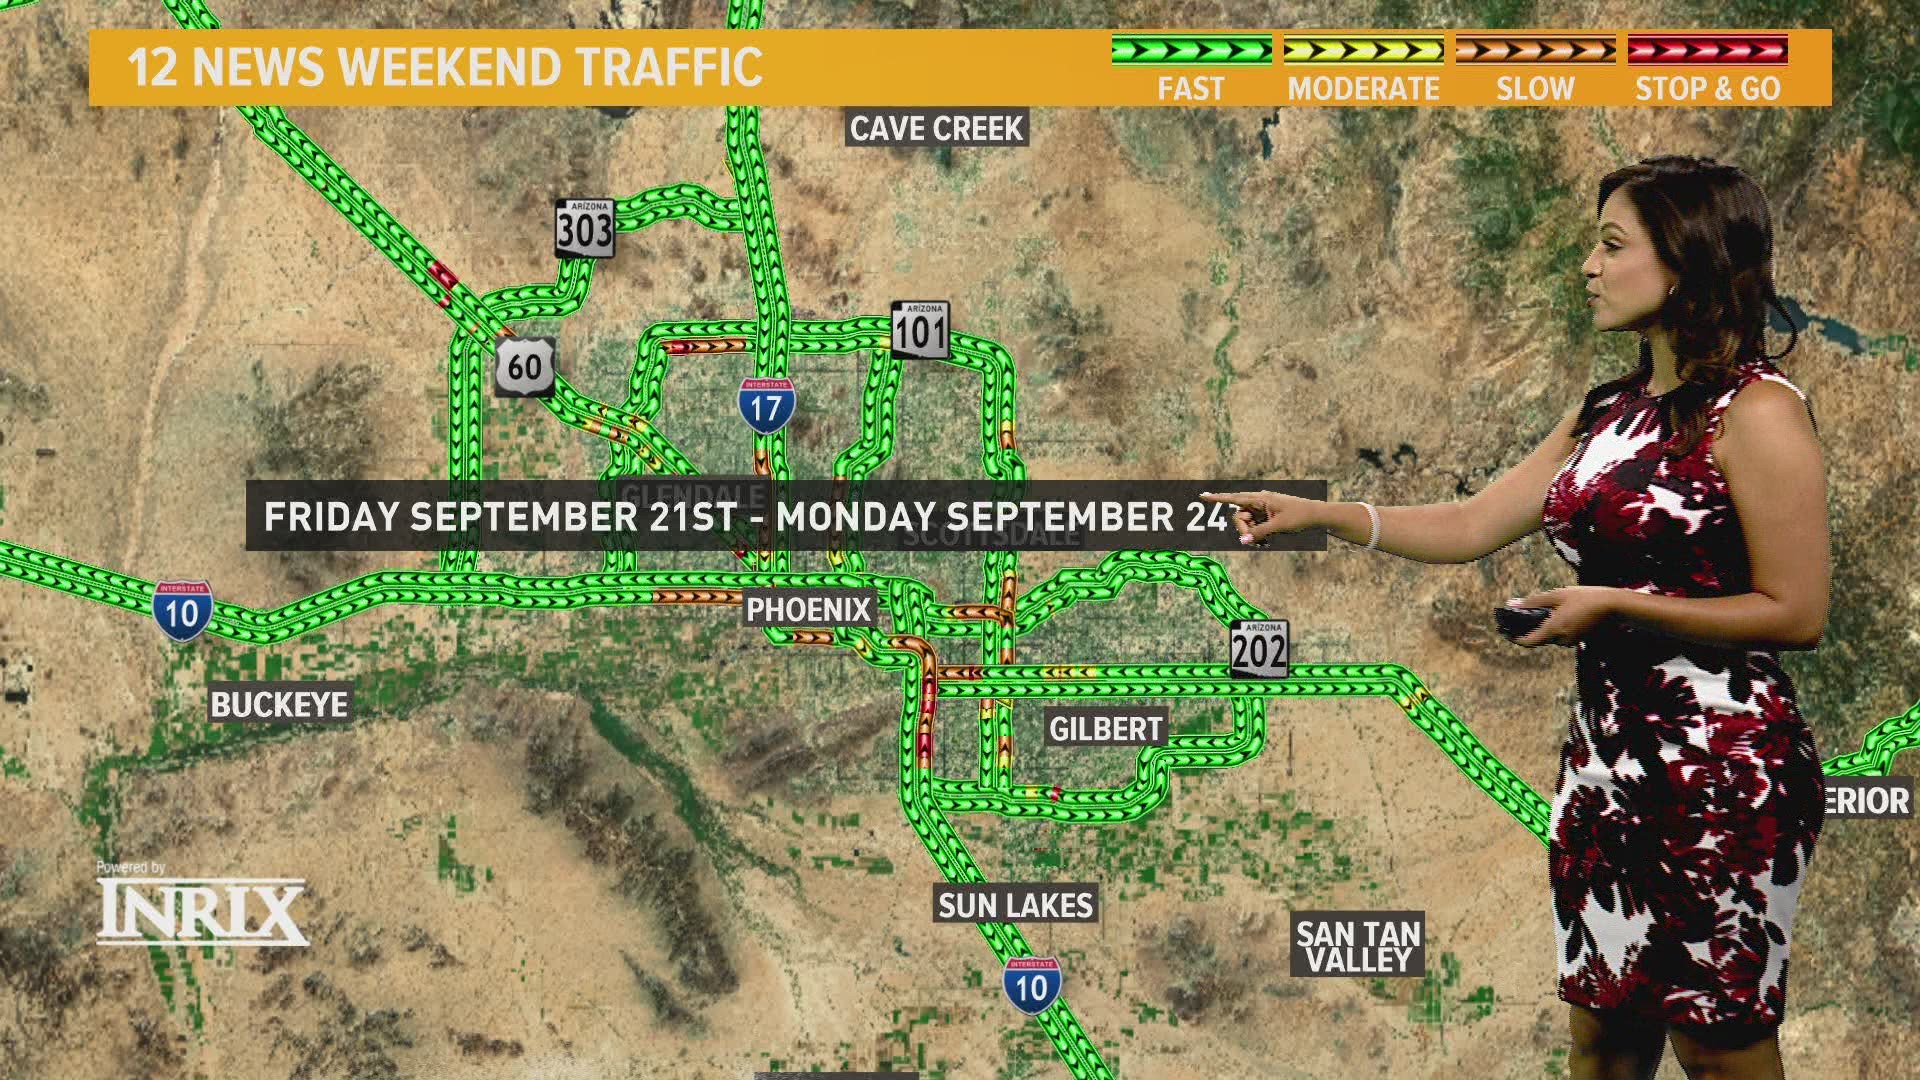 Here's your weekend traffic outlook for September 21 - September 24.